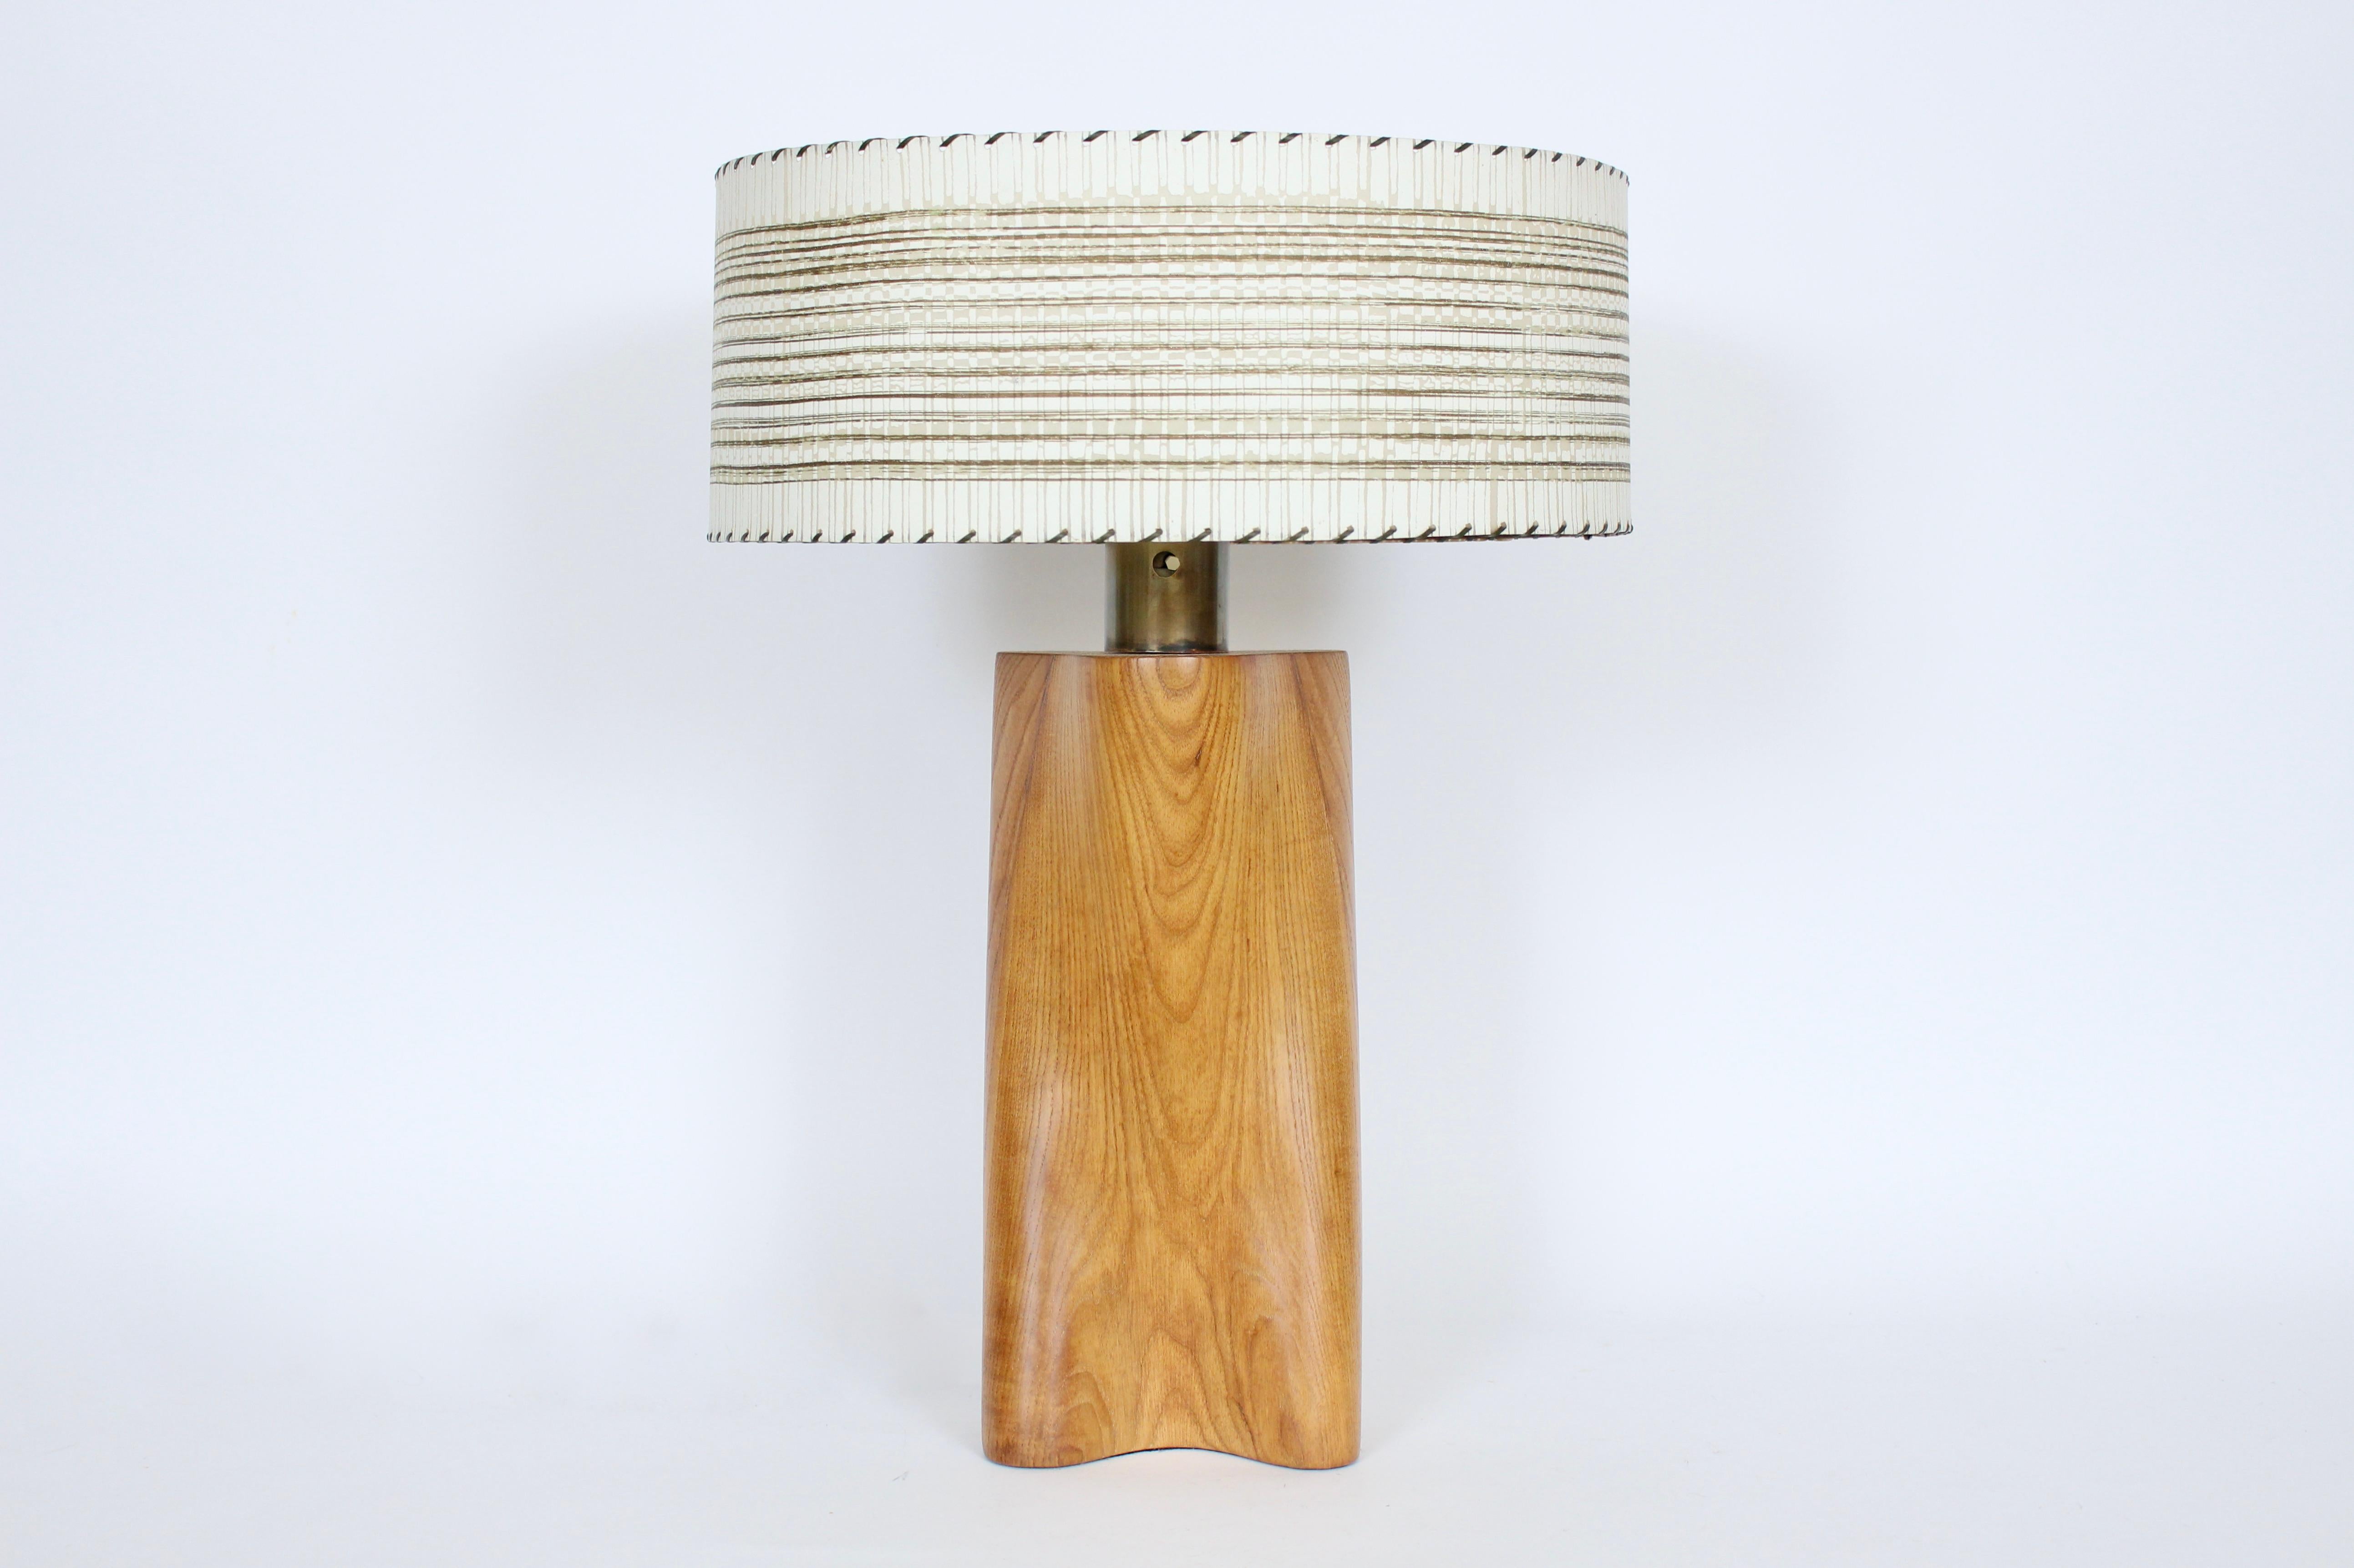 Yasha Heifetz Biomorphic Ash Table Lamp with Milk Glass Shade, 1940s For Sale 13